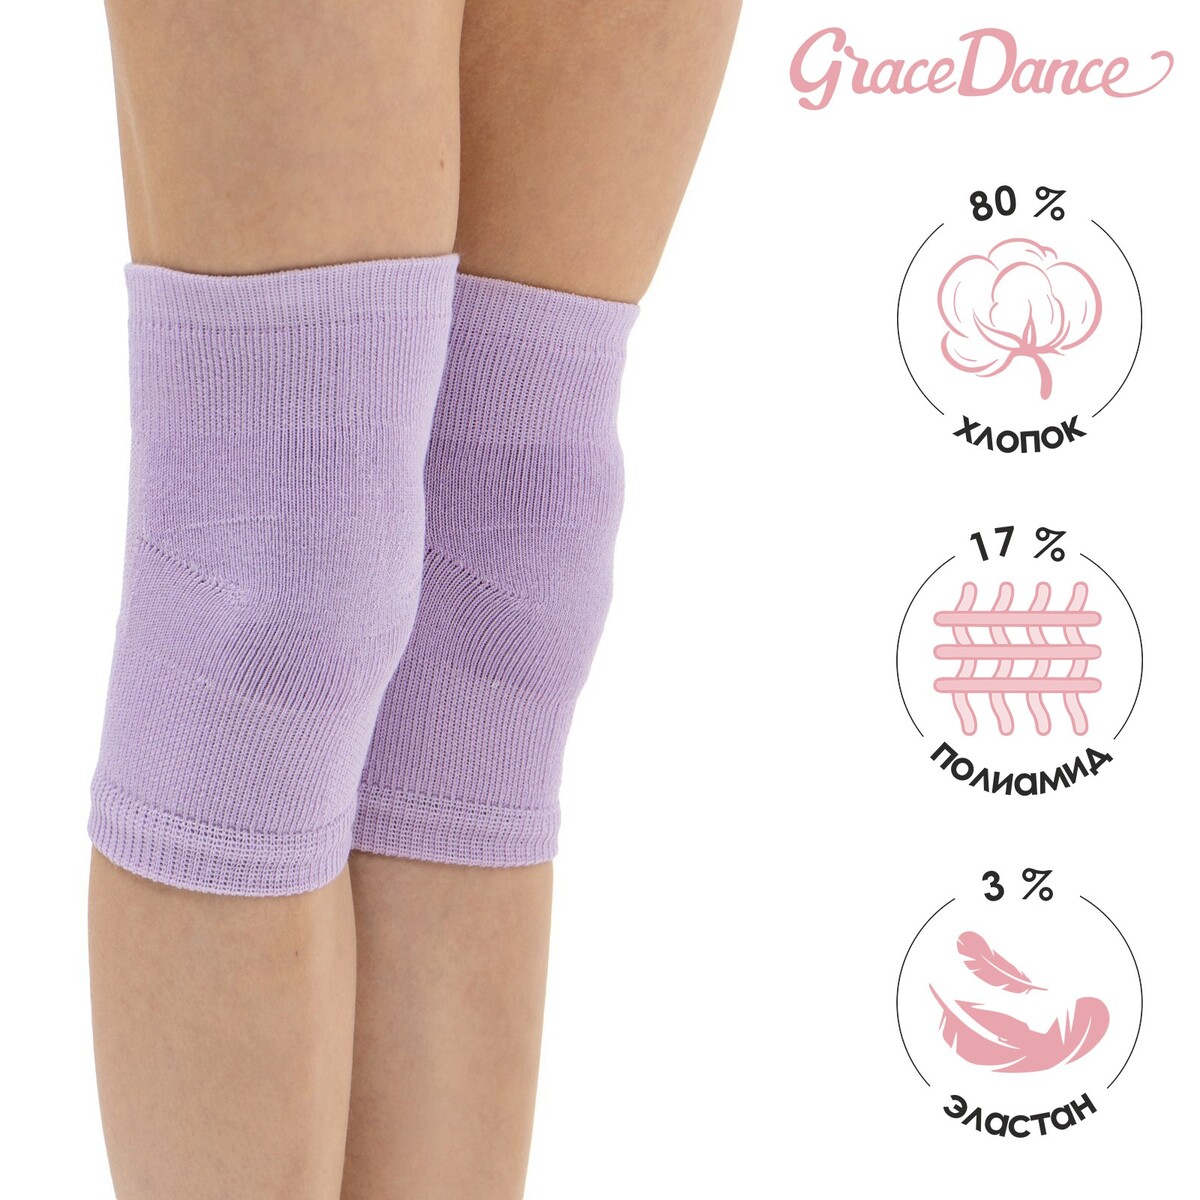 Наколенники для гимнастики и танцев grace dance №2, р. m, цвет сиреневый Grace Dance